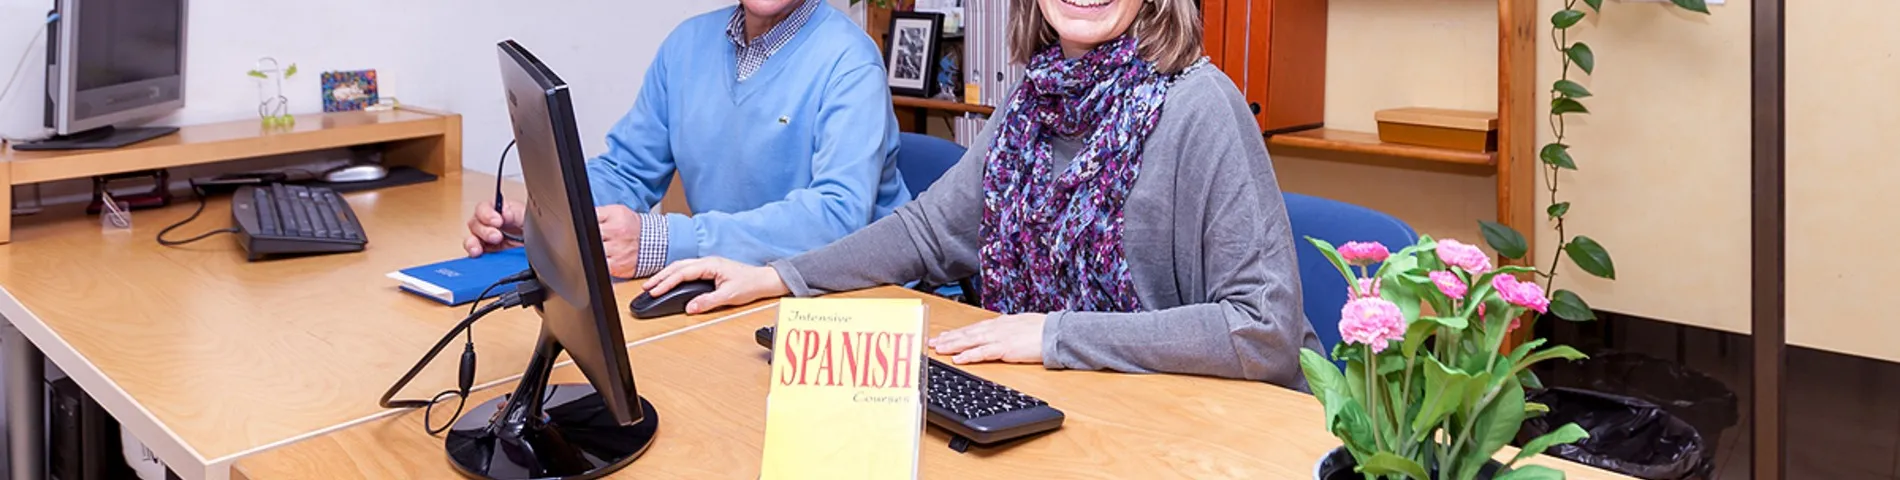 Hola Spanish Courses foto 1